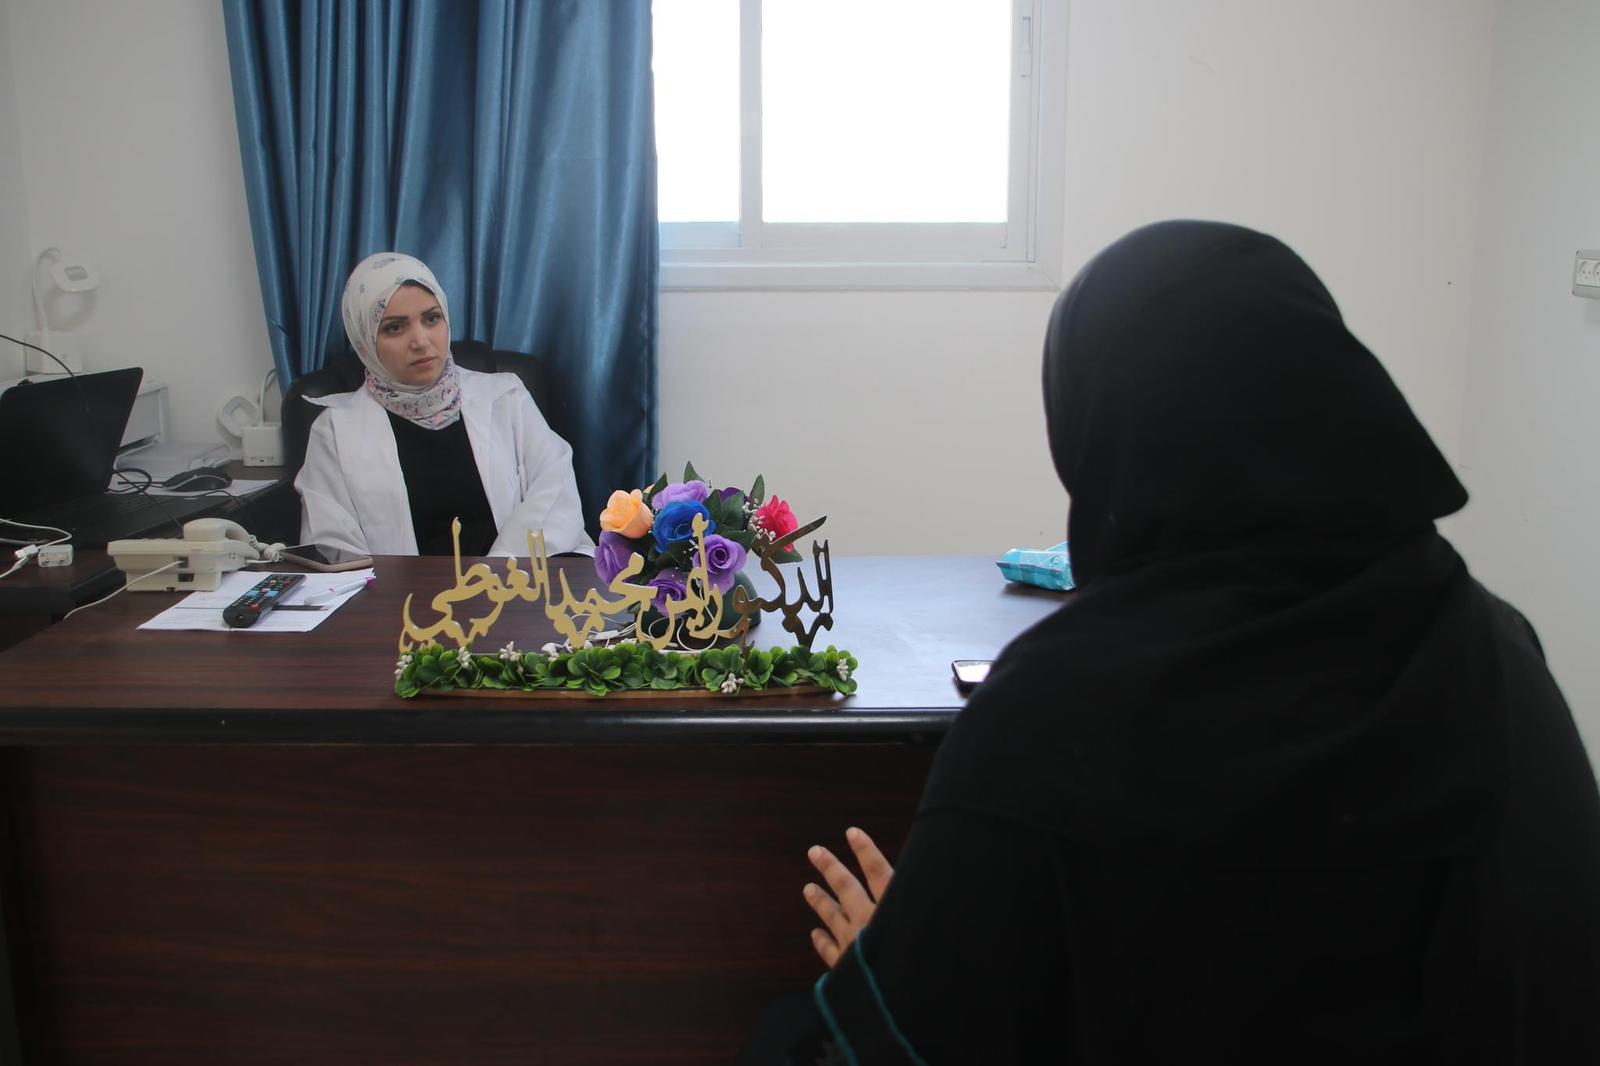 Amani Al-Derbi providing psychosocial support